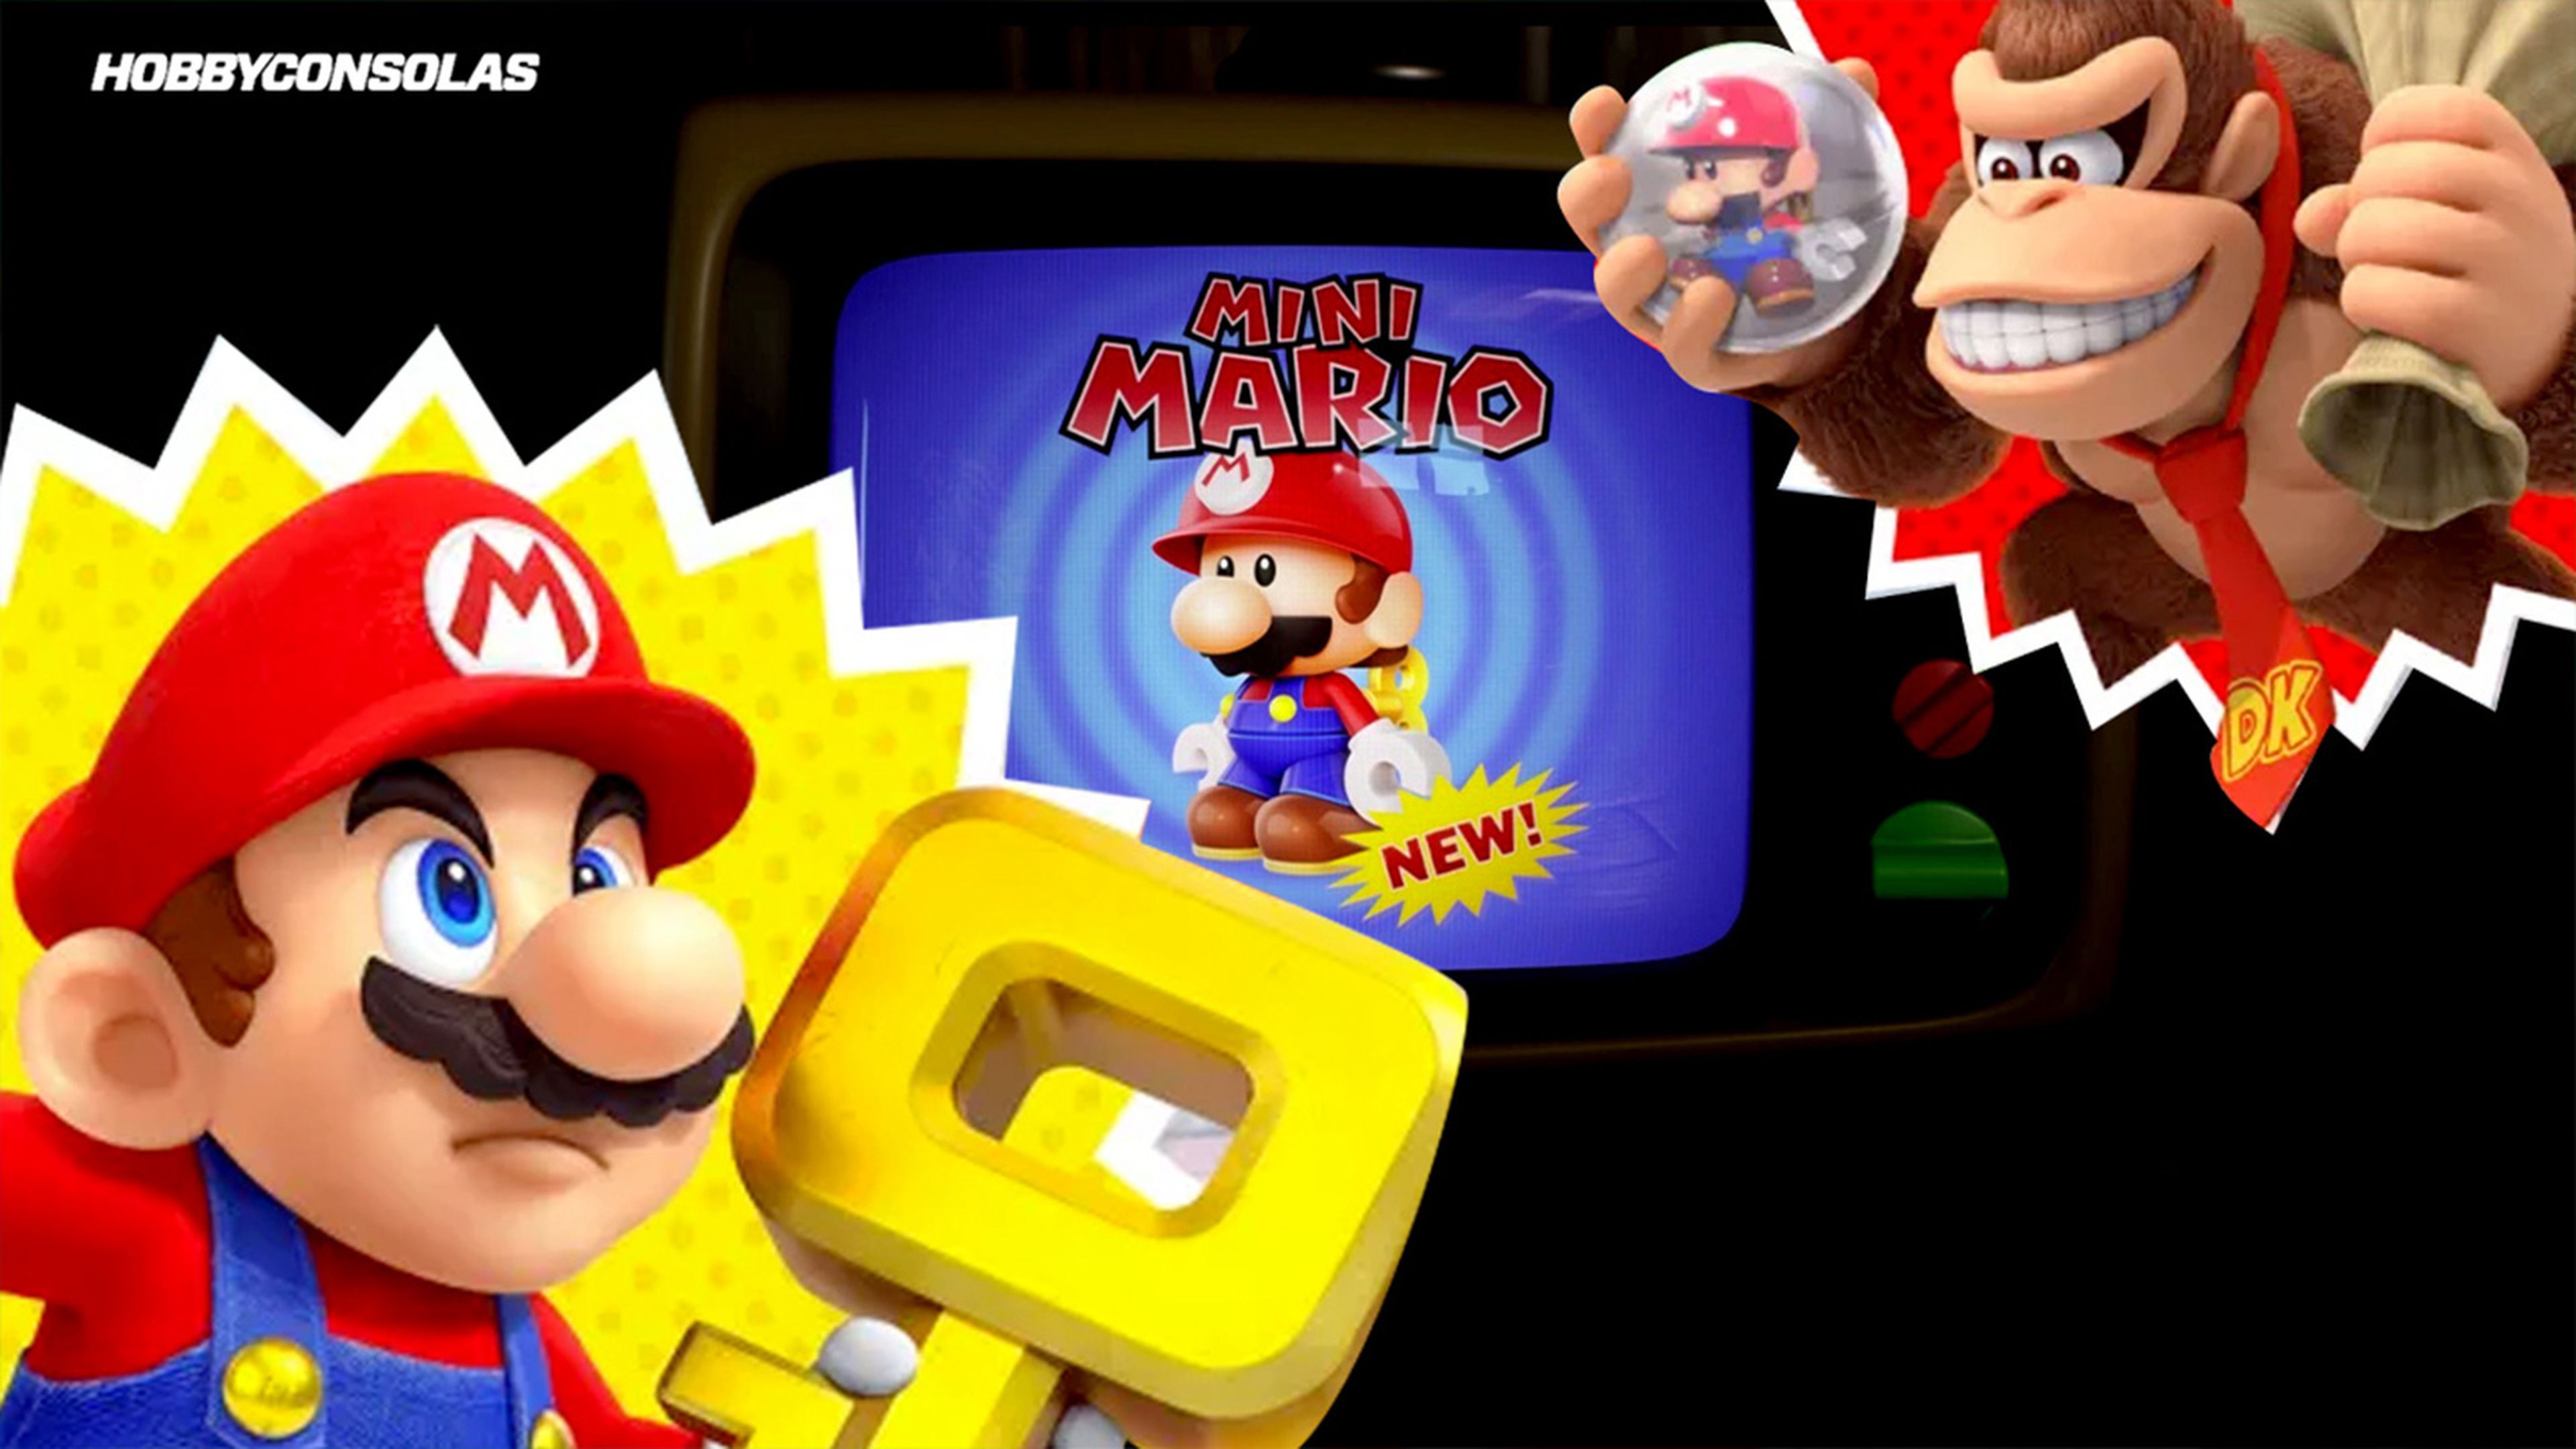 Análisis Mario vs Donkey Kong para Nintendo Switch